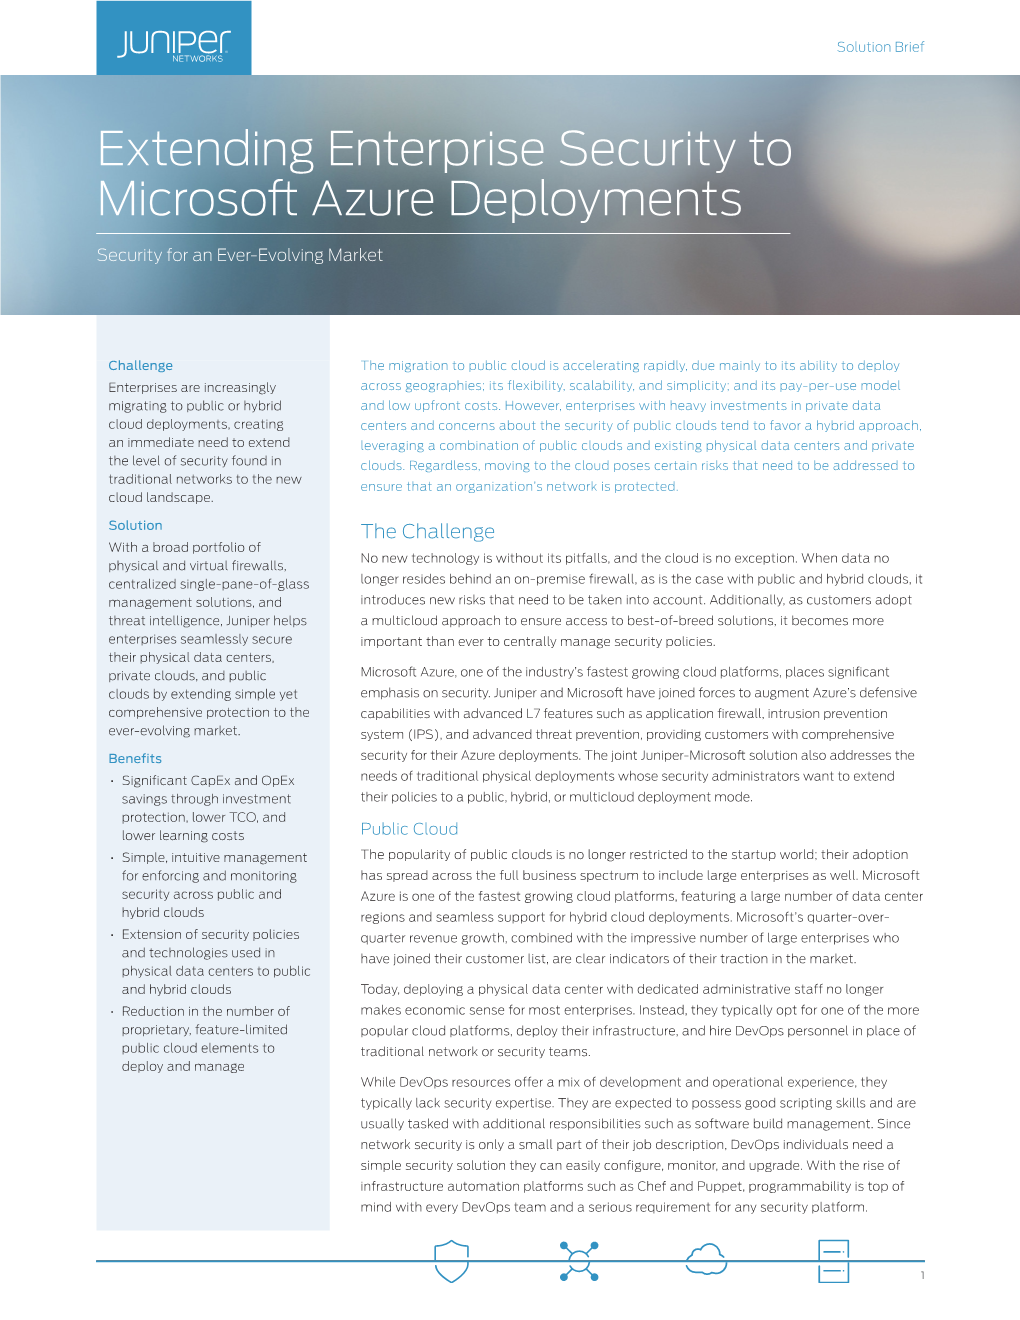 Extending Enterprise Security to Microsoft Azure Deployments